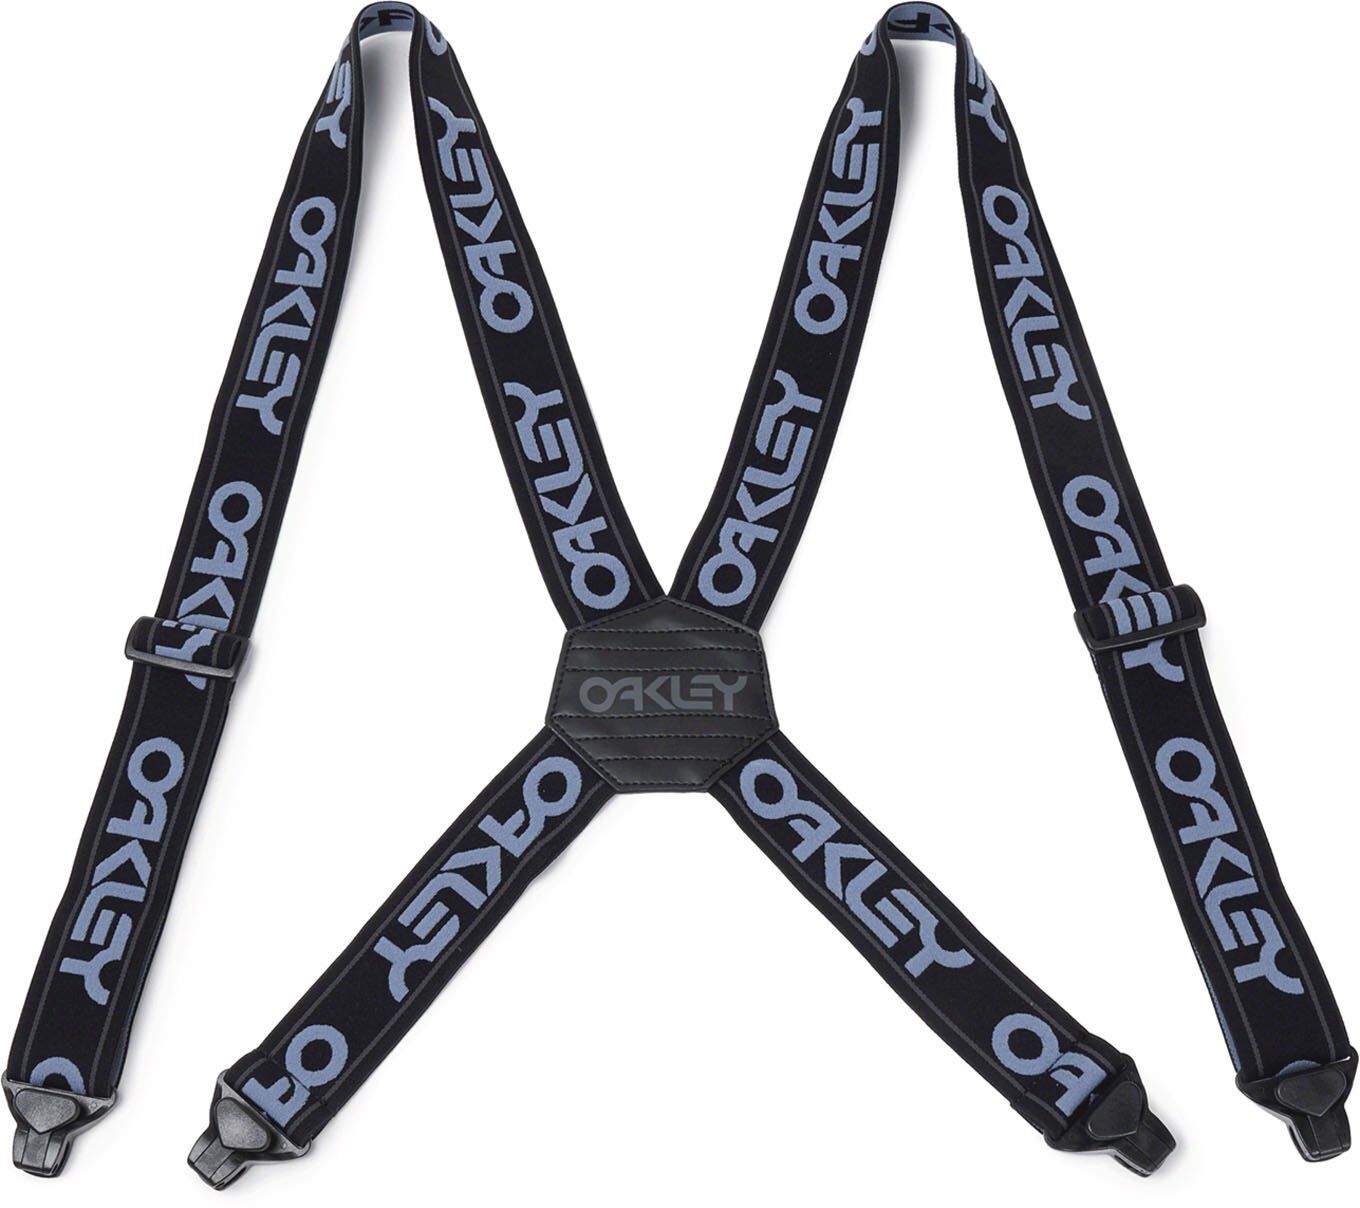 Oakley Factory Suspenders - Lyžařské kšandy | Hardloop